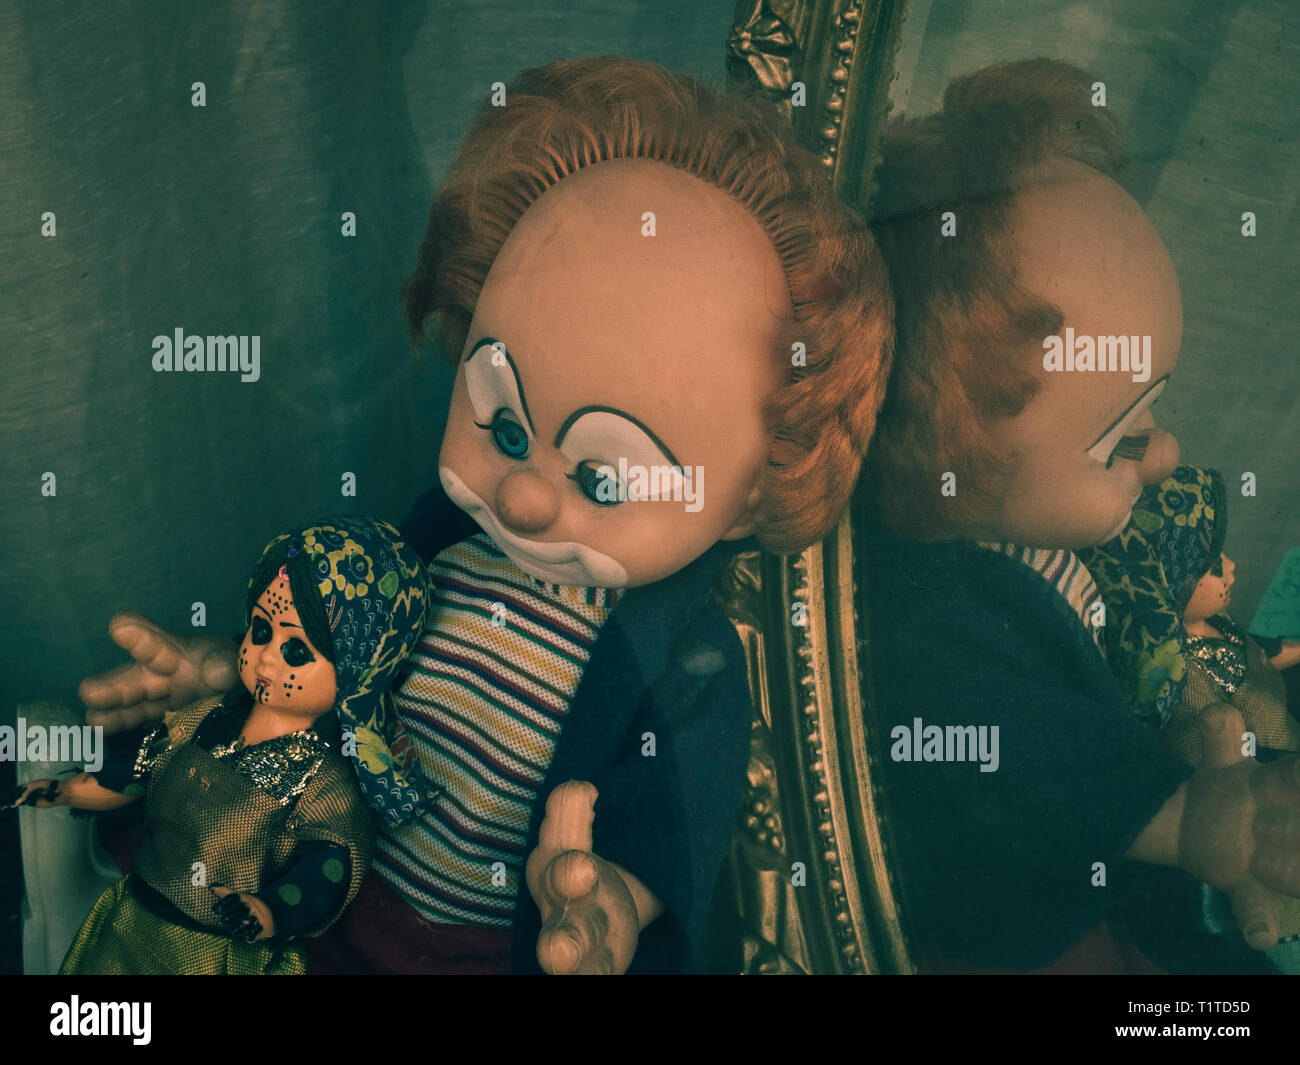 Clown and doll in a bric-a-brac shop window Stock Photo